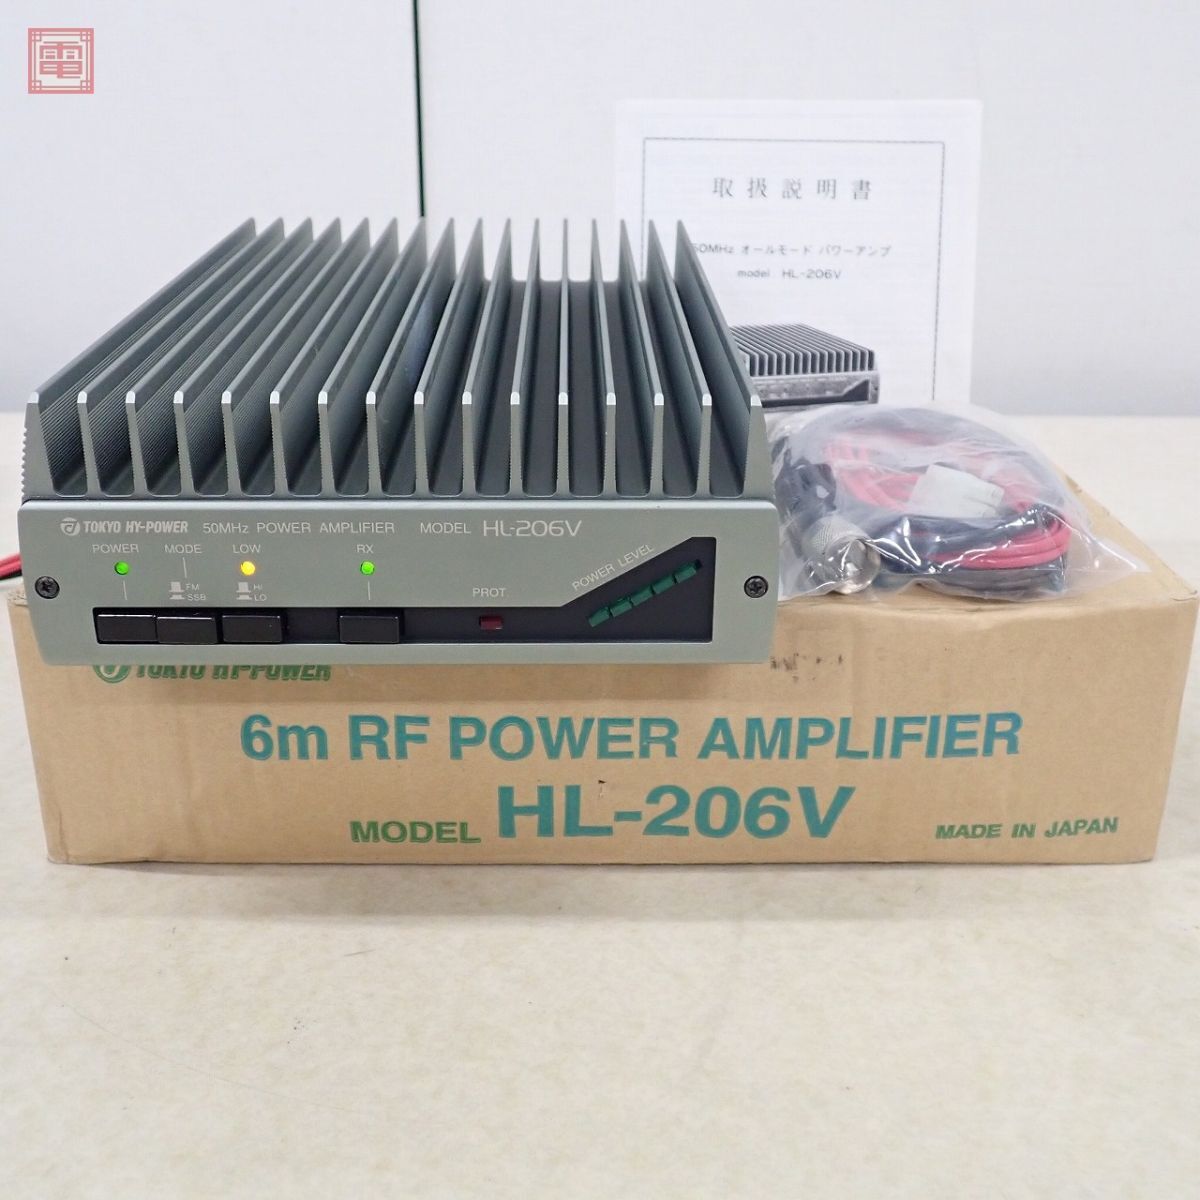  Tokyo high power HL-206V linear amplifier 50MHz 200W manual * original box attaching [20